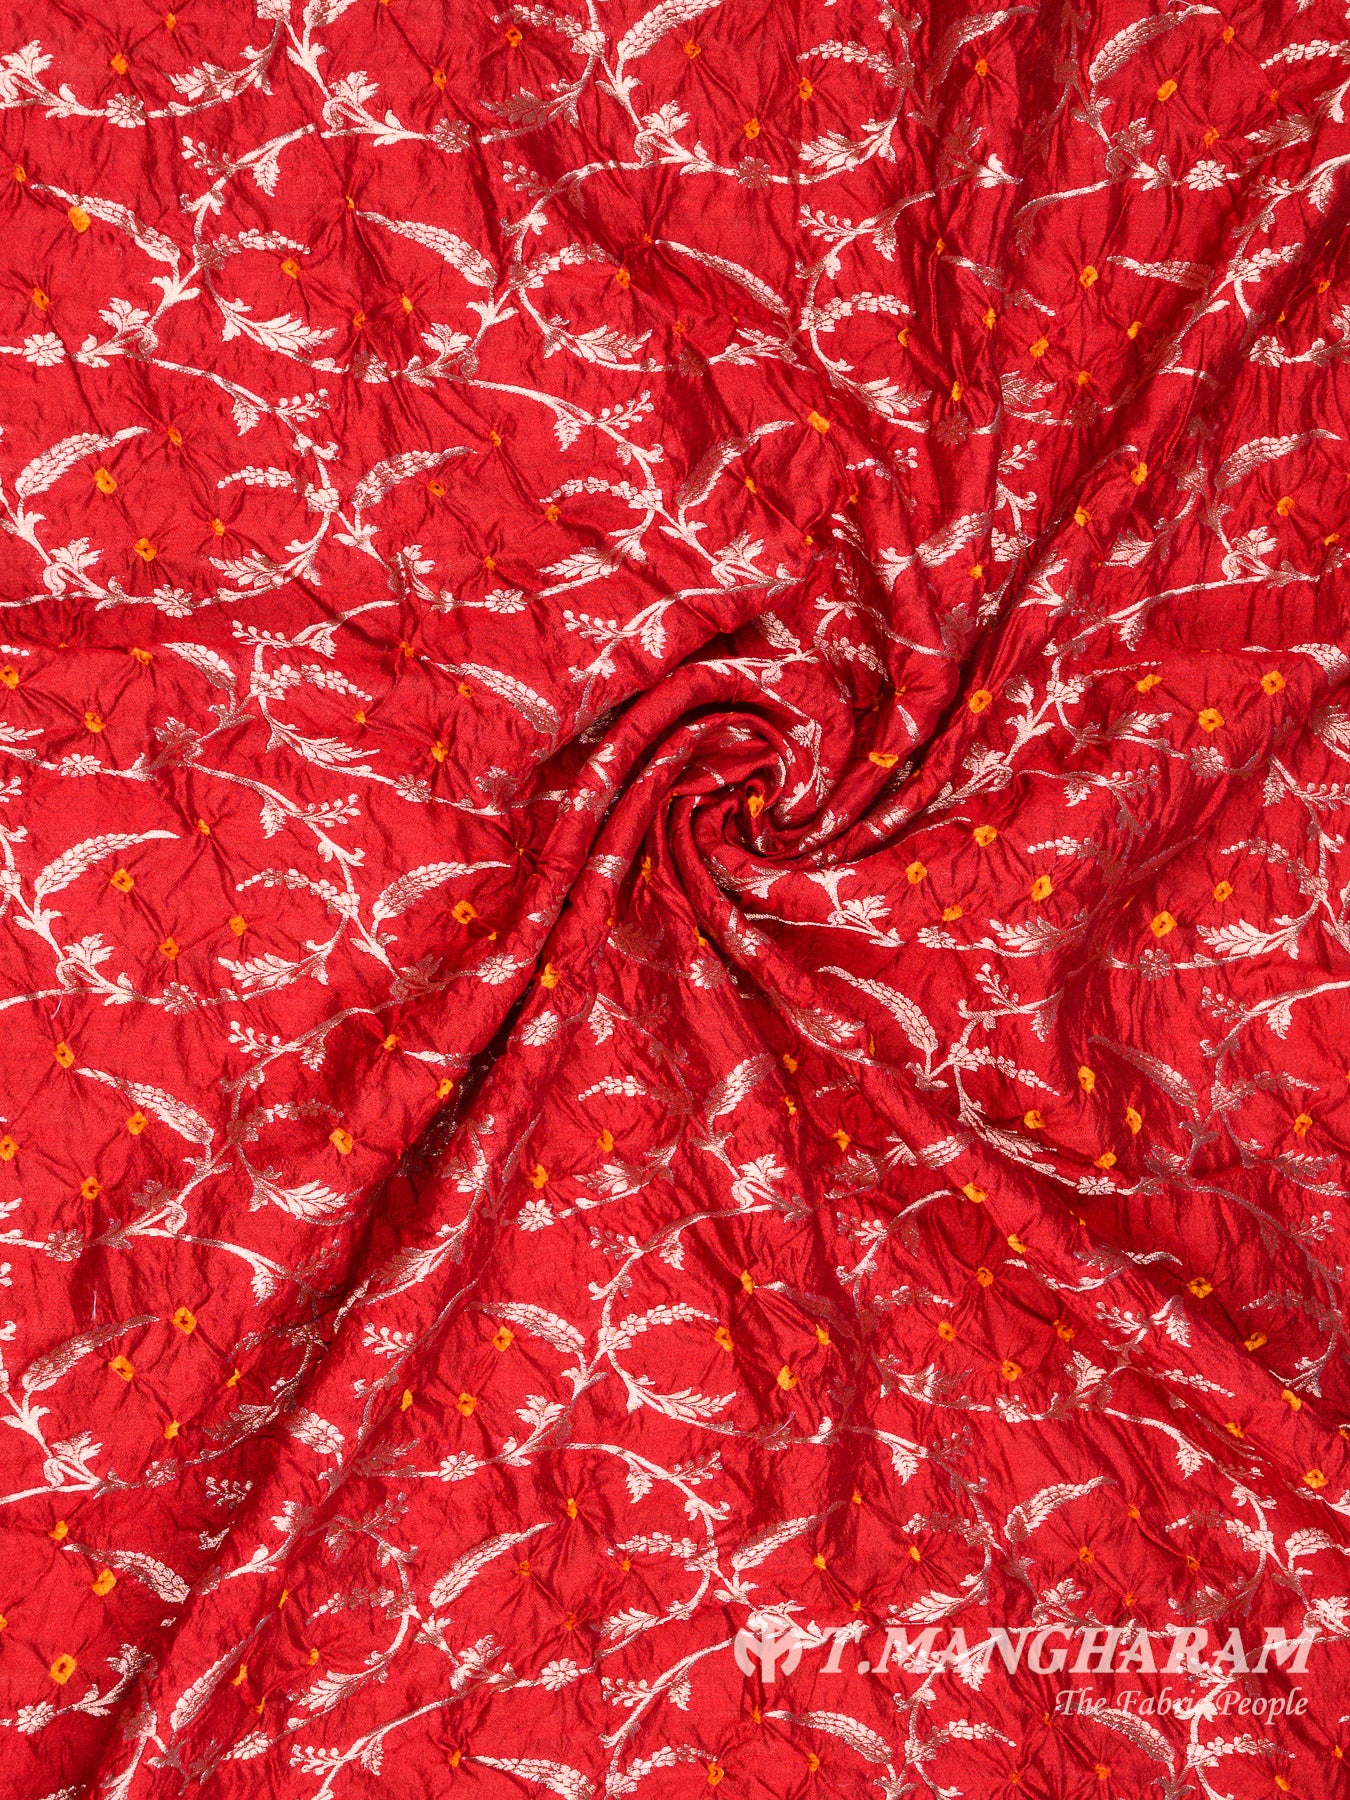 Red Banaras Fabric - EB5777 view-1